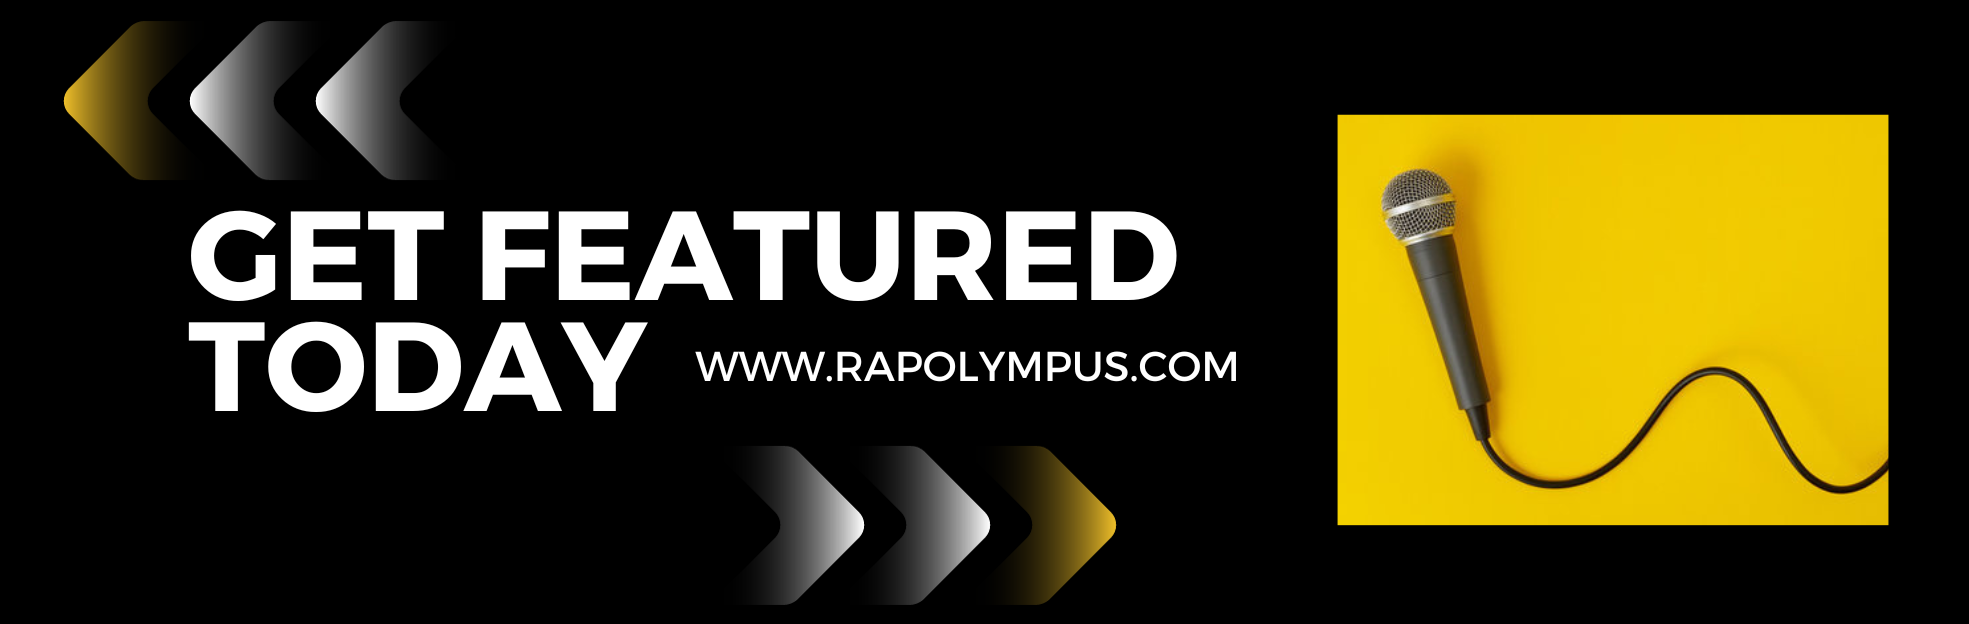 rap olympus media - banner